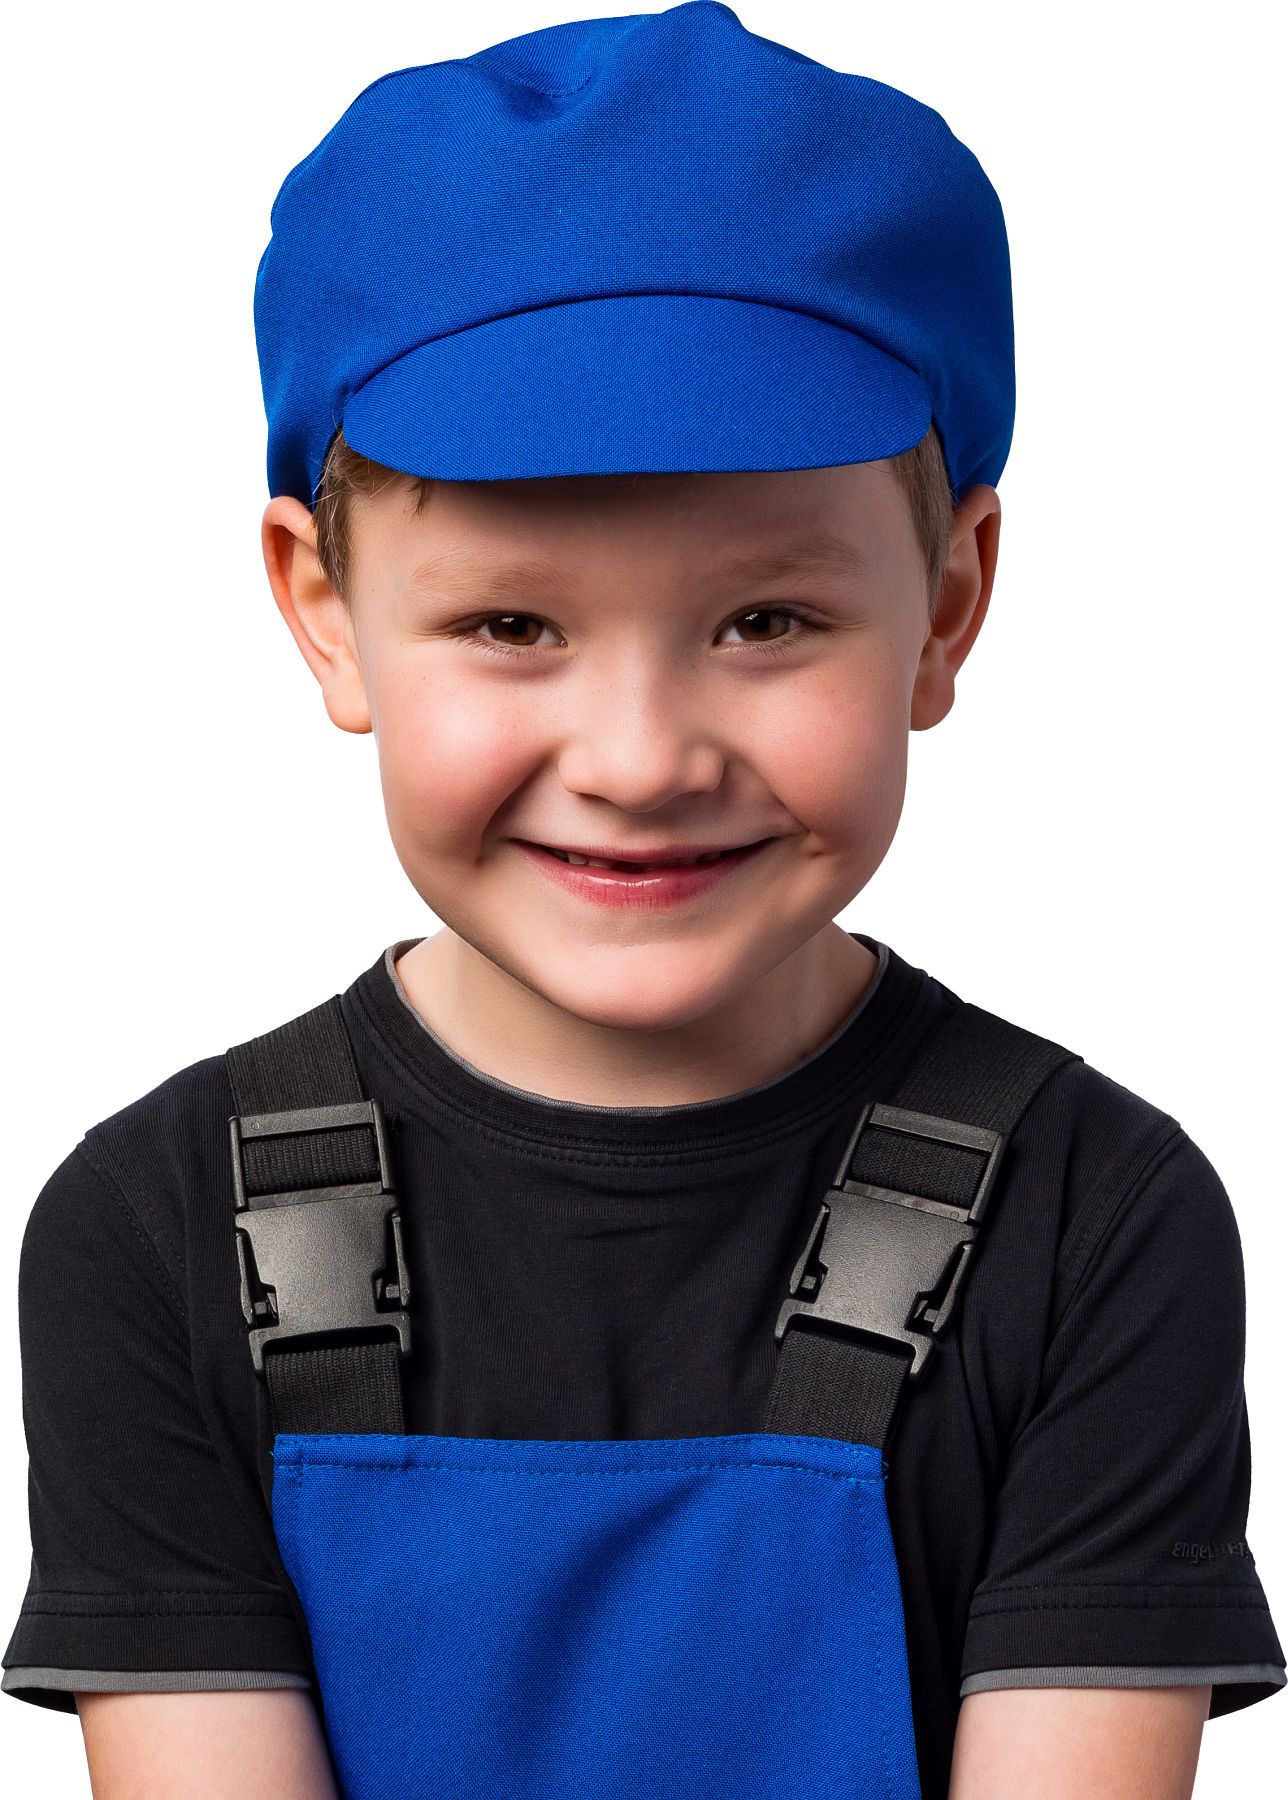 Shield cap, blue for children's